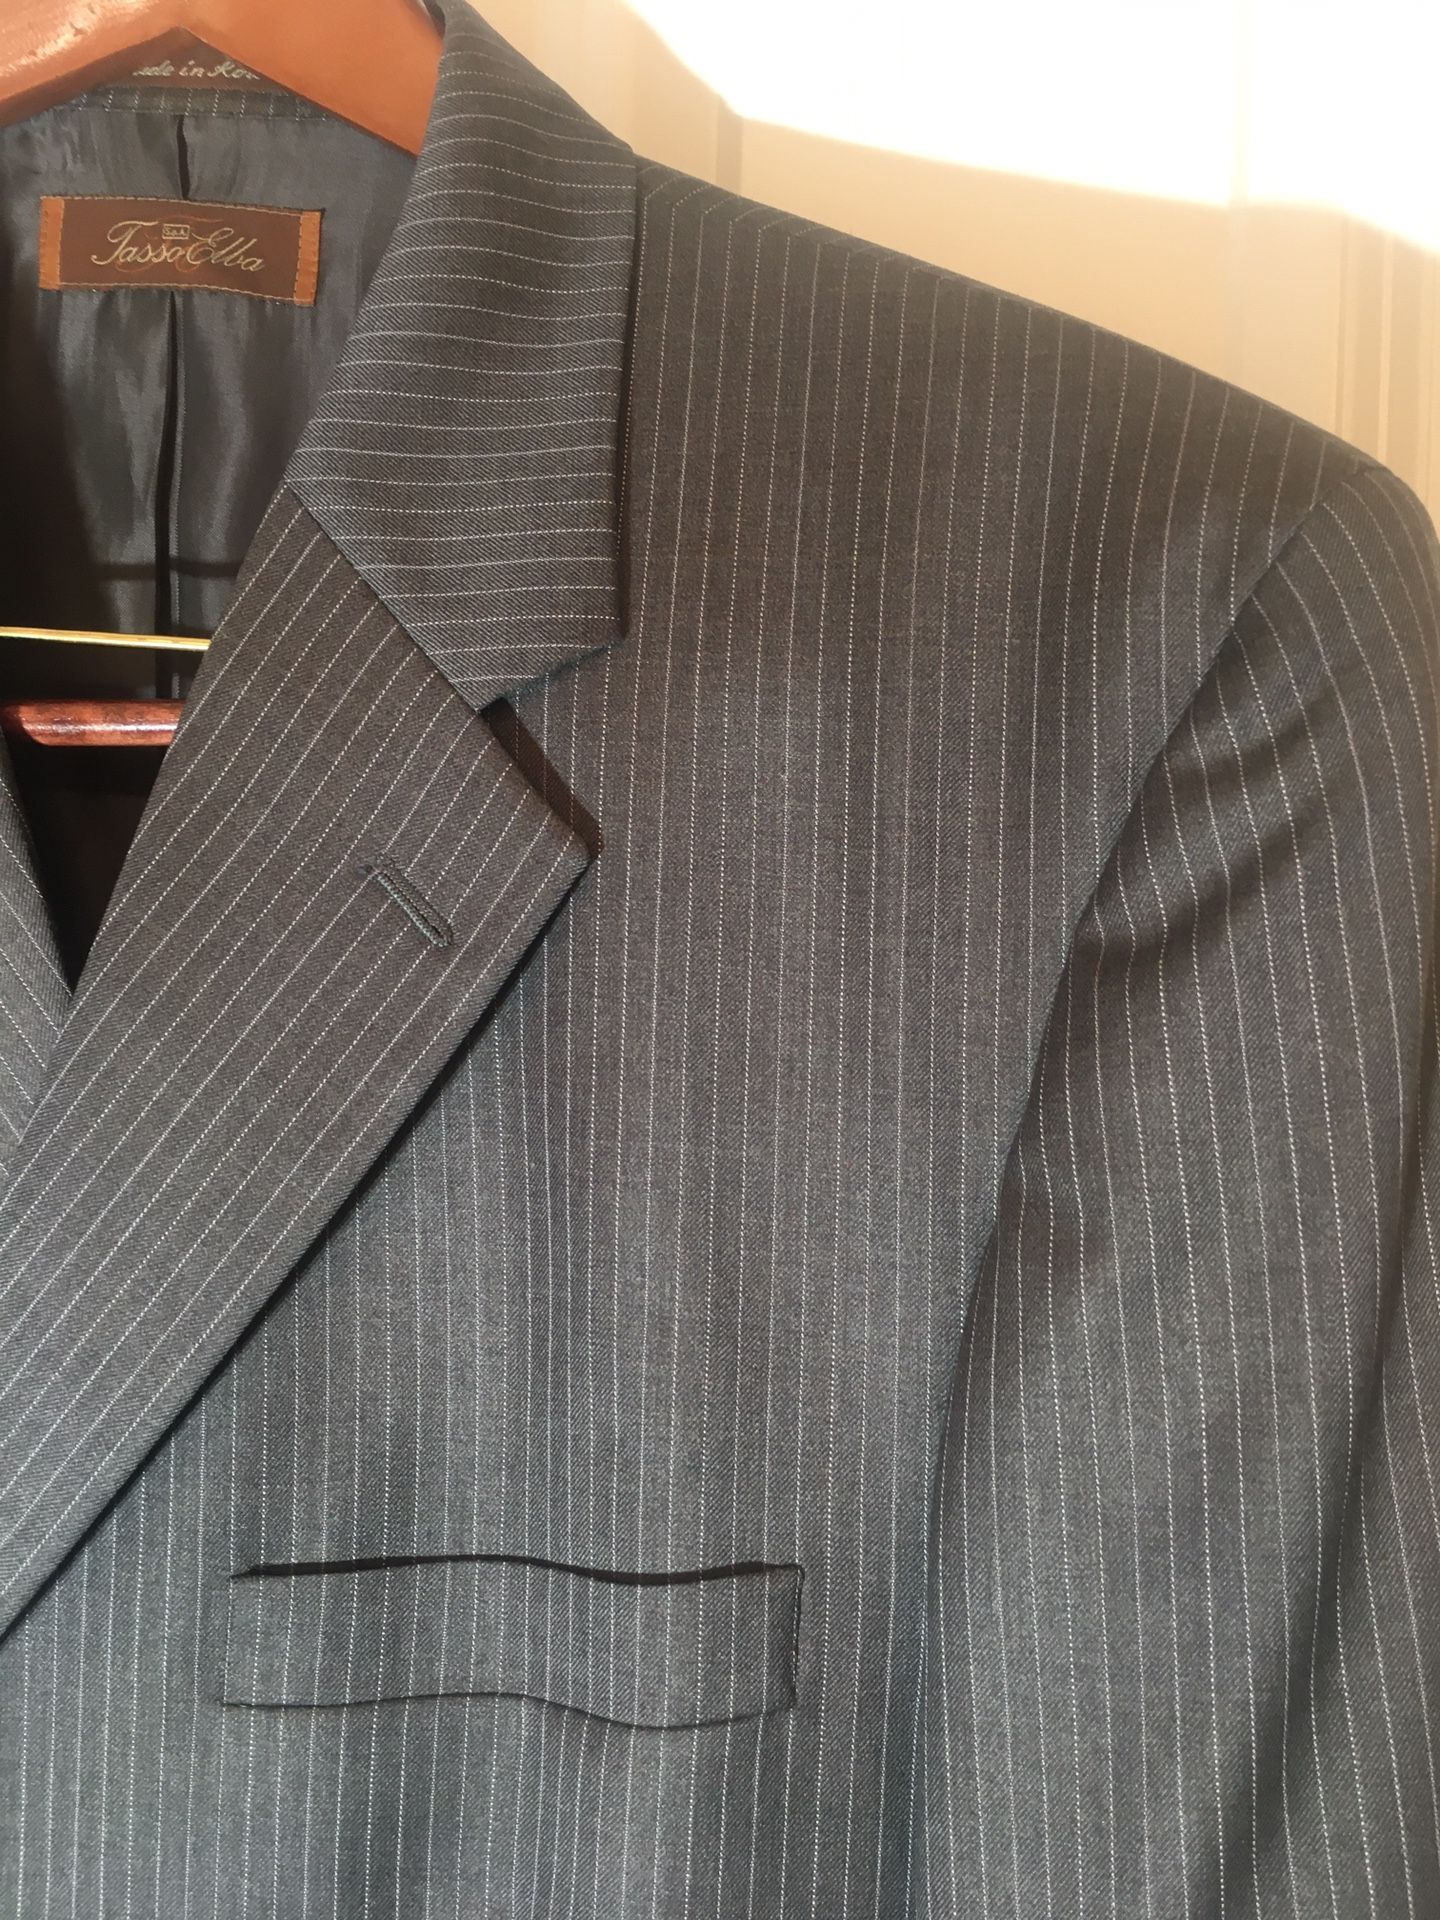 Men’s Tasso Elba gray pin striped three Piece suit